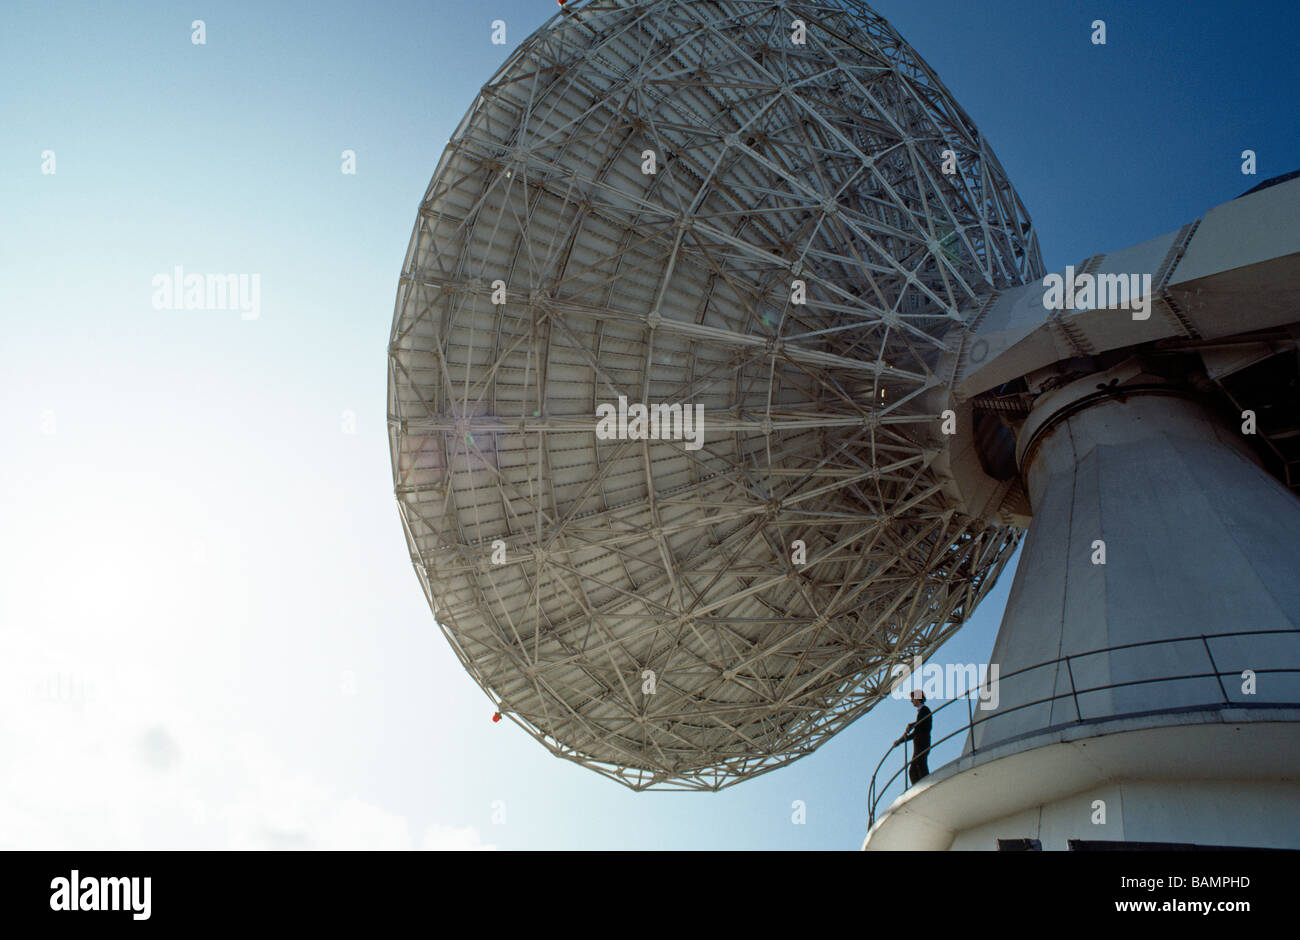 TECHNICIAN STANDING ON THE PLATFORM OF A TELECOMMUNICATIONS SATELLITE DISH CORNWALL ENGLAND Stock Photo